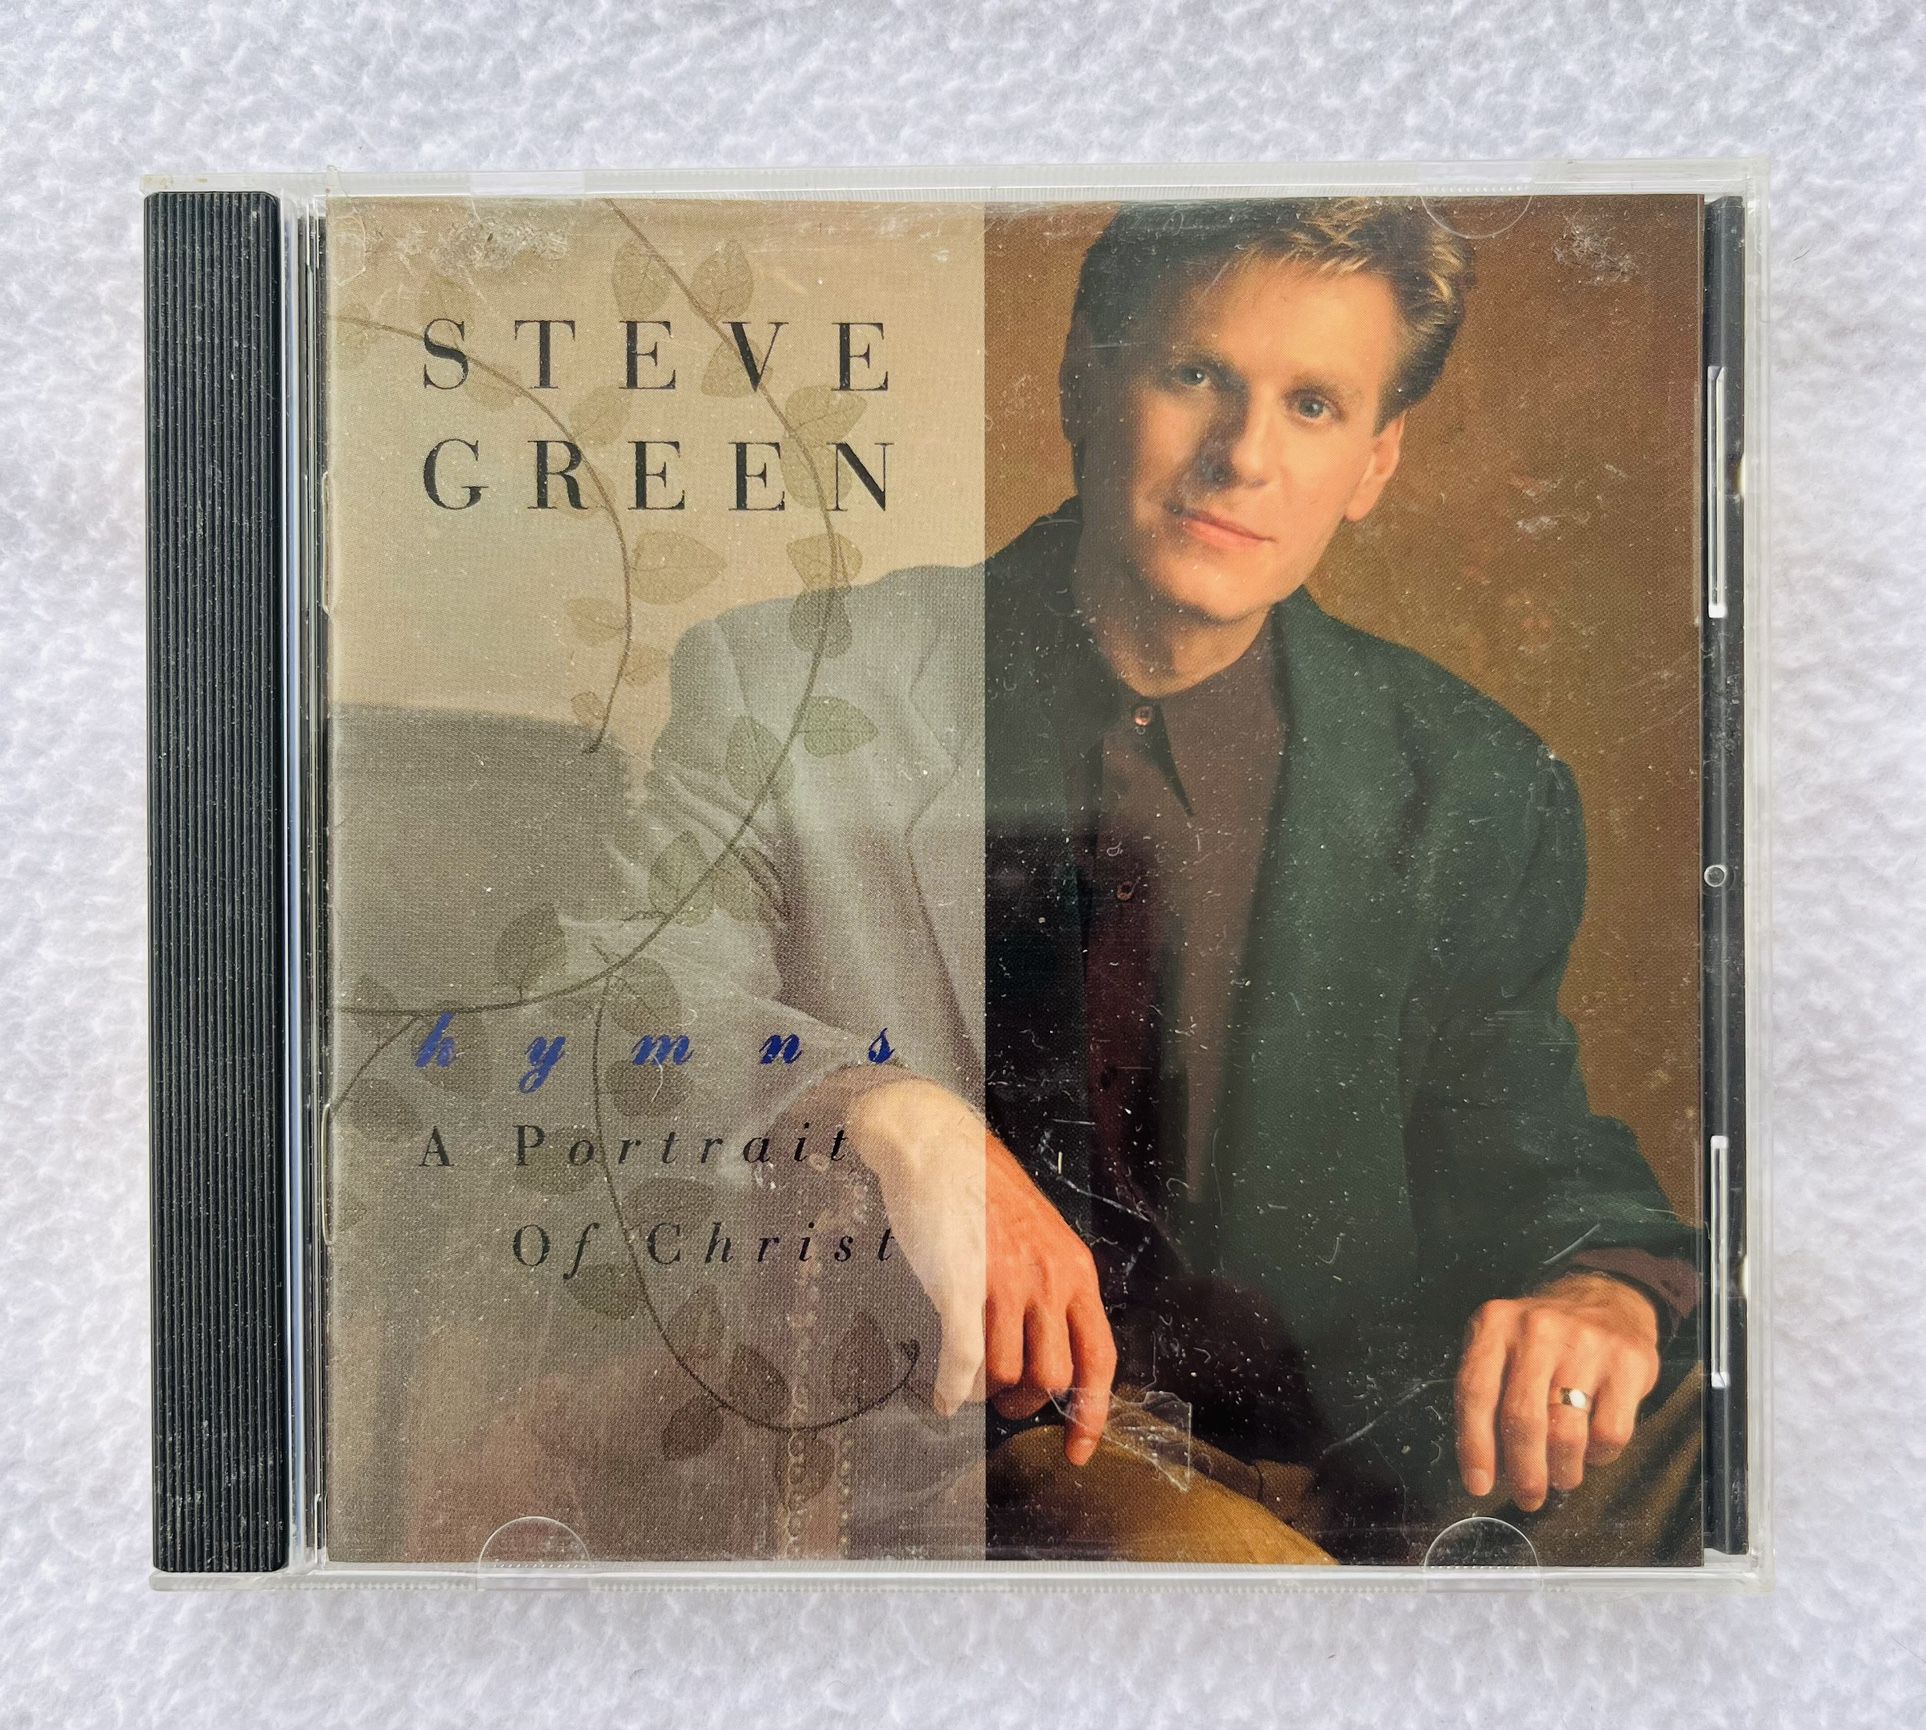 Steve Green Hymns: Portrait of Christ CD Audio Worship Songs Church